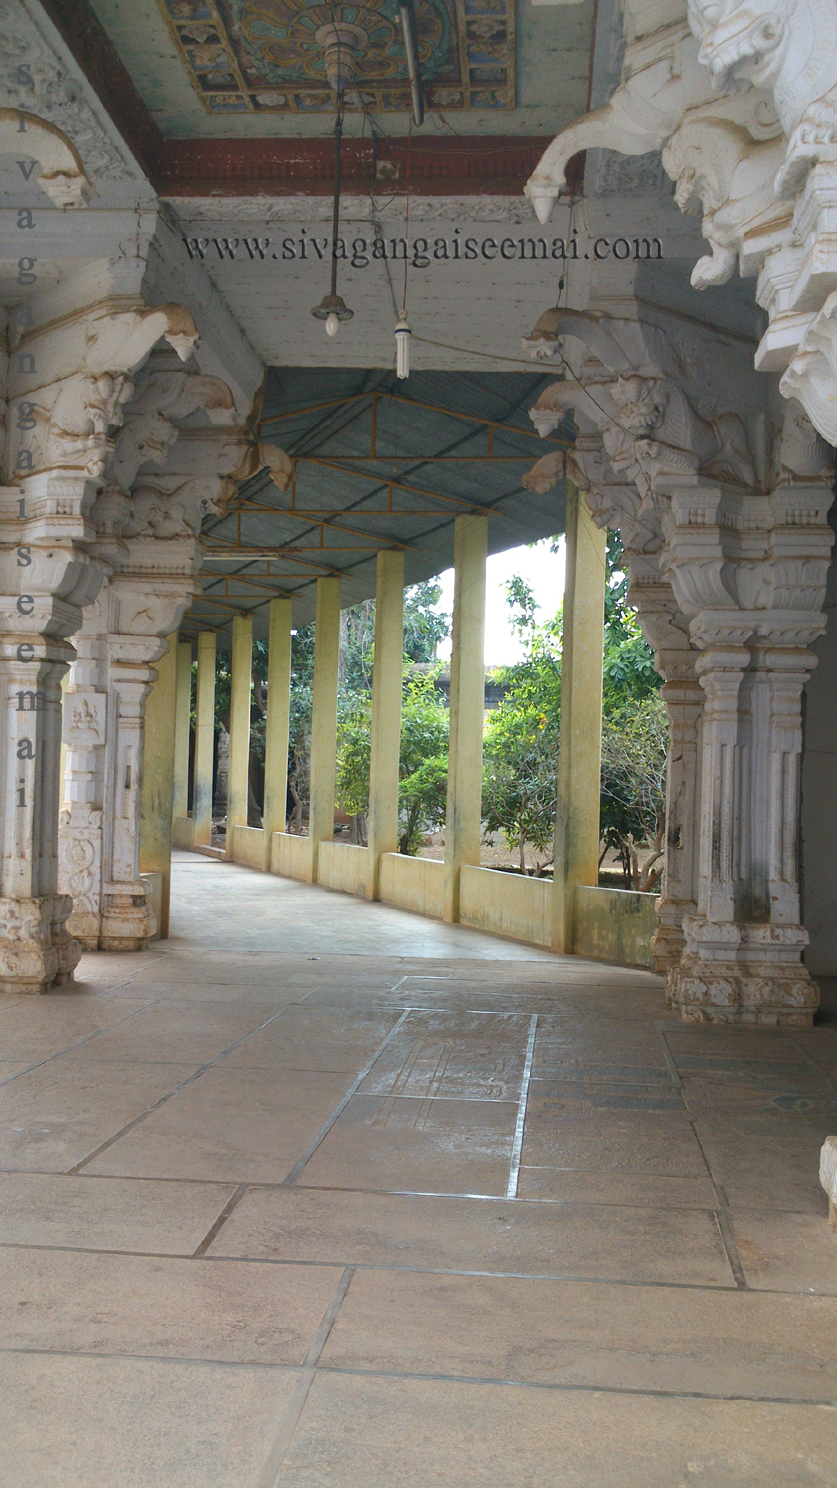 Latest Stills taken from Kalayar kovil Temple Located in South Tamilnadu of India